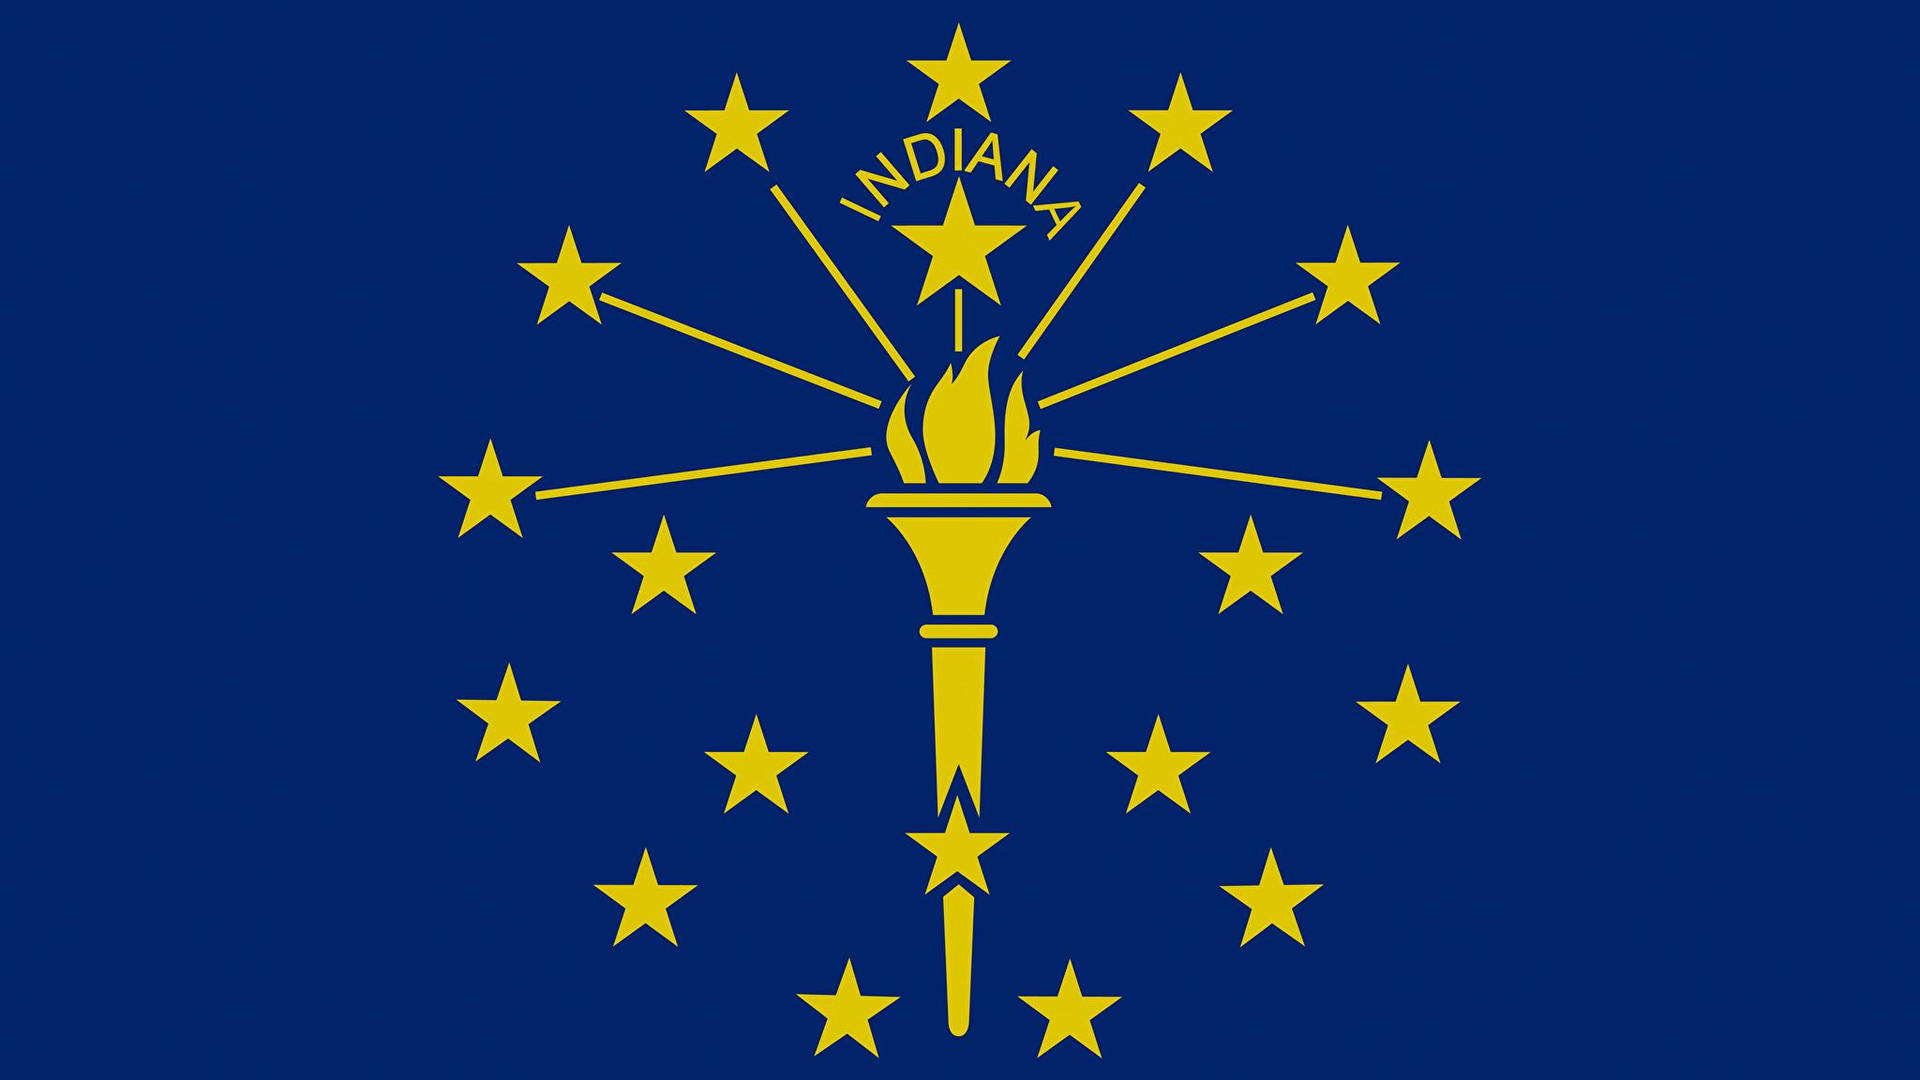 Indianaflag Vergrößert Dargestellt Wallpaper